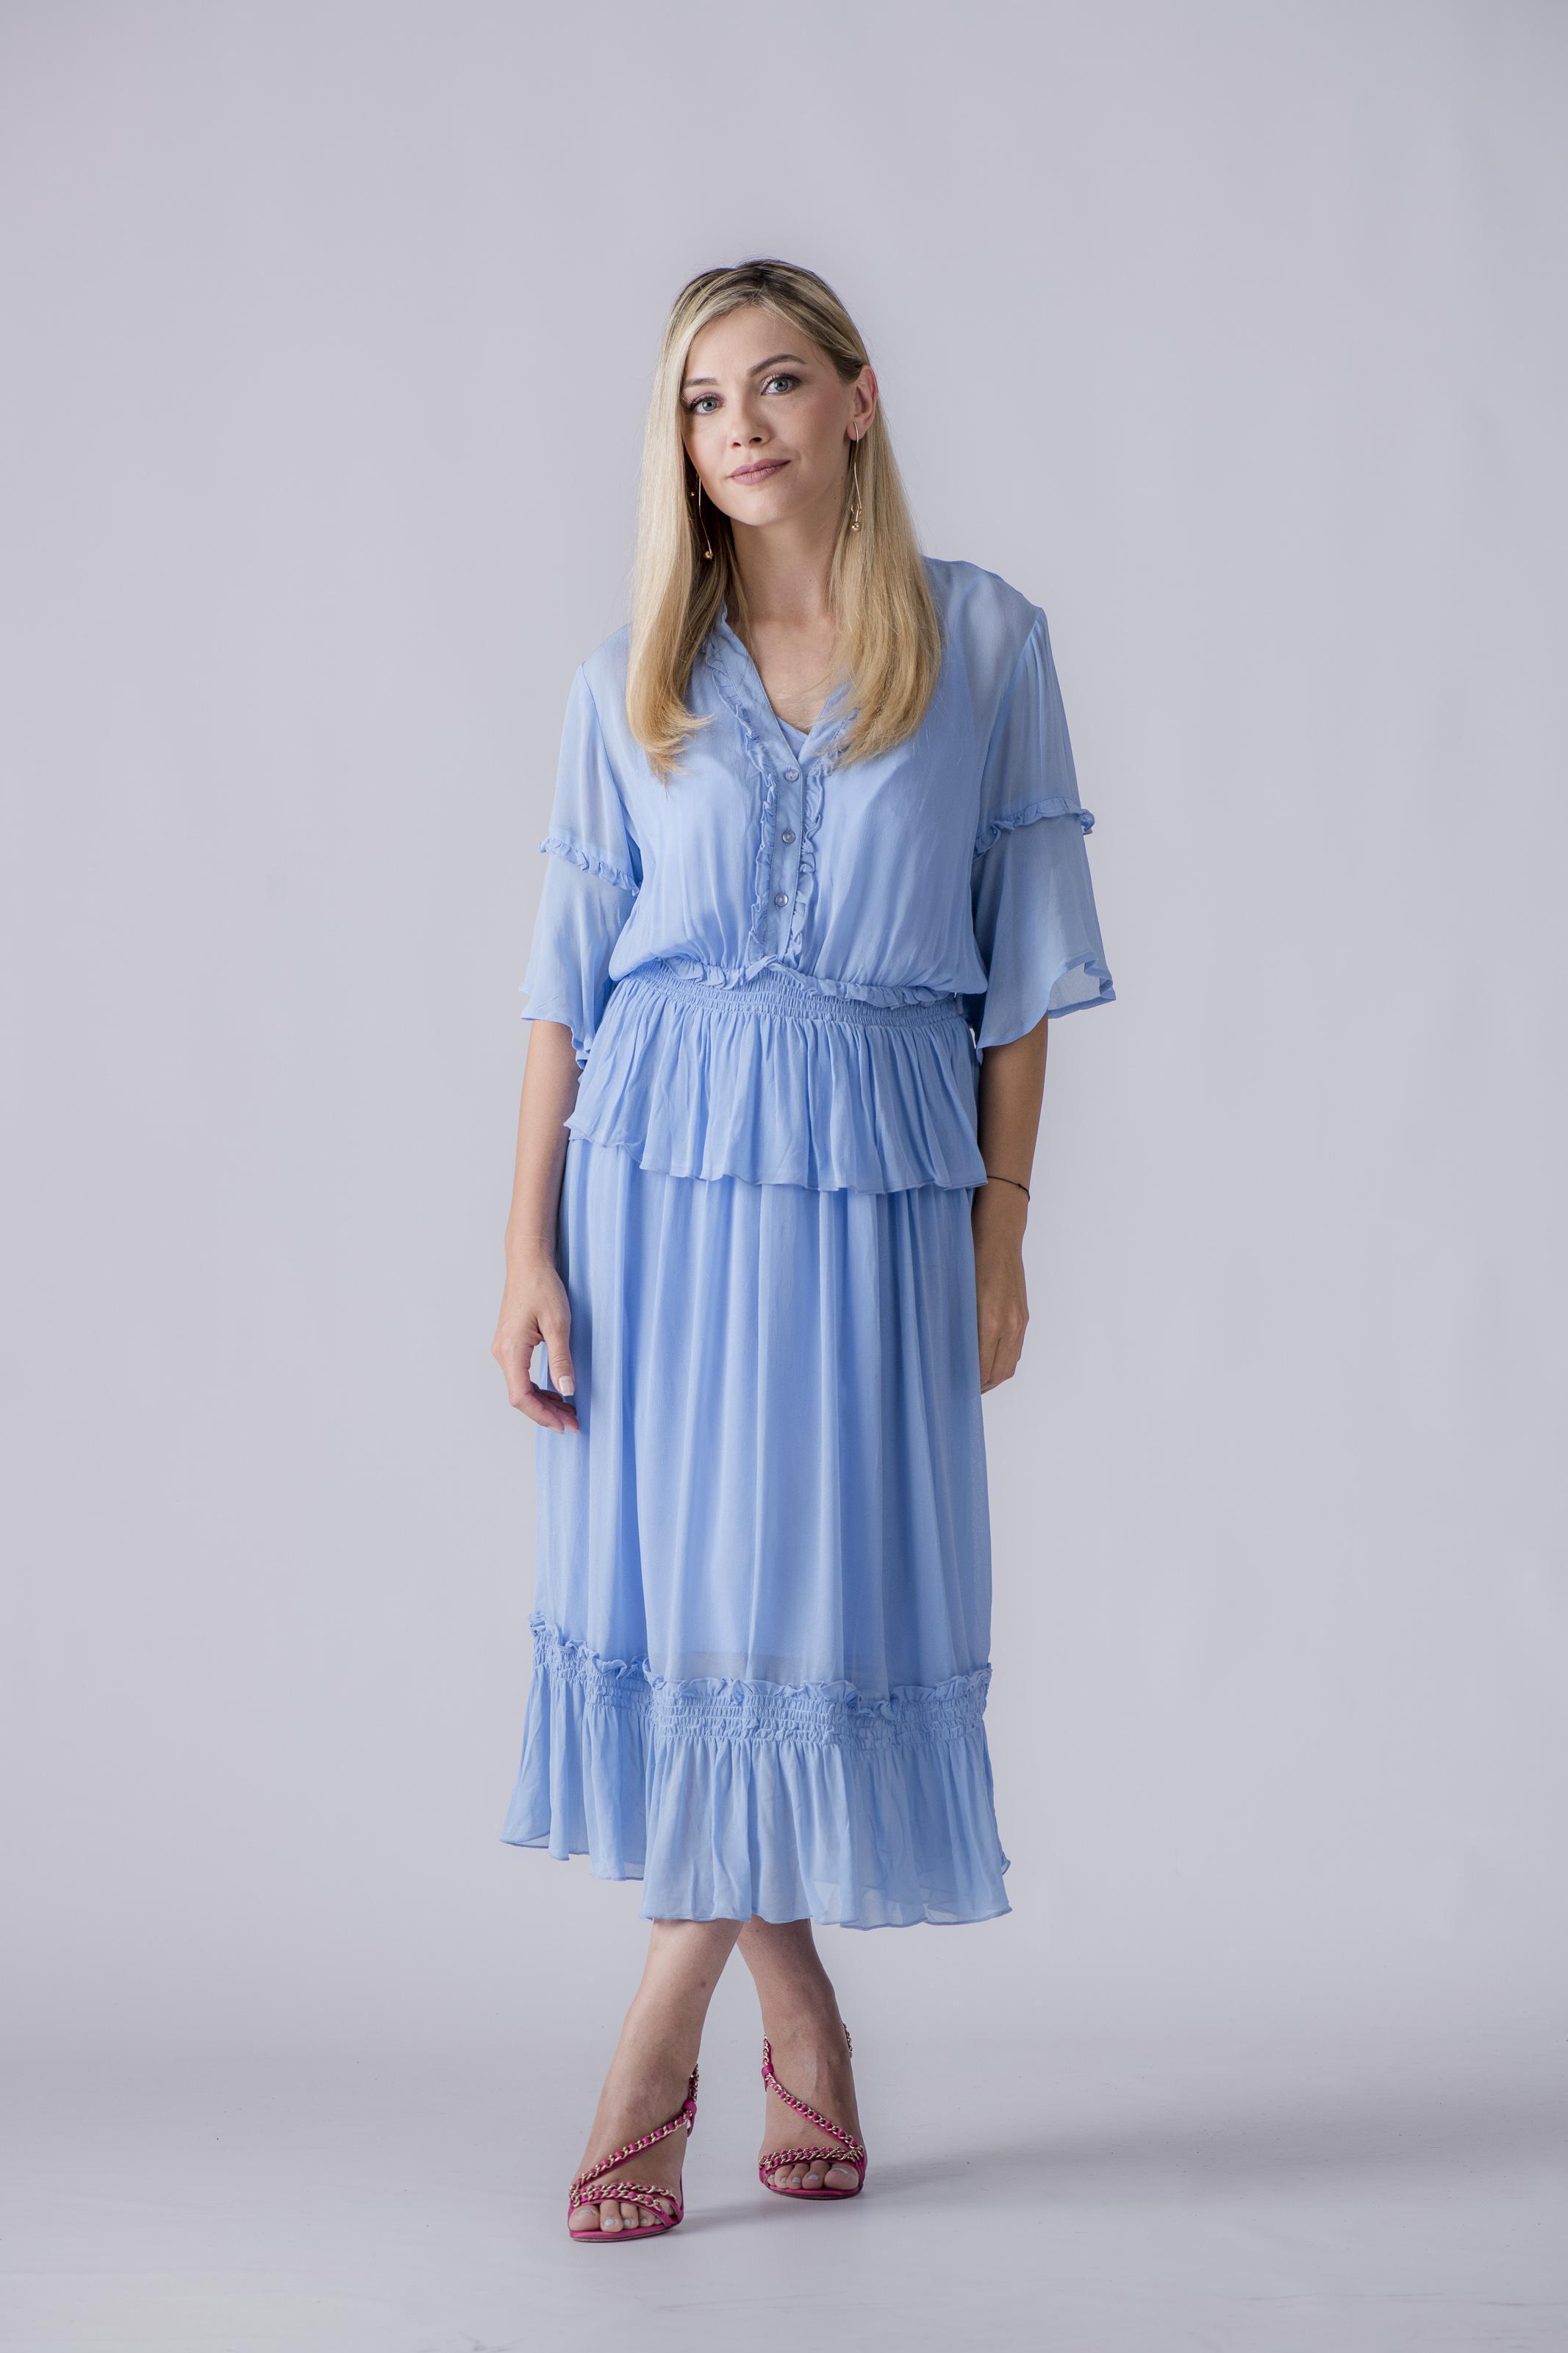 Andreea Ibacka, într-o rochie albastră